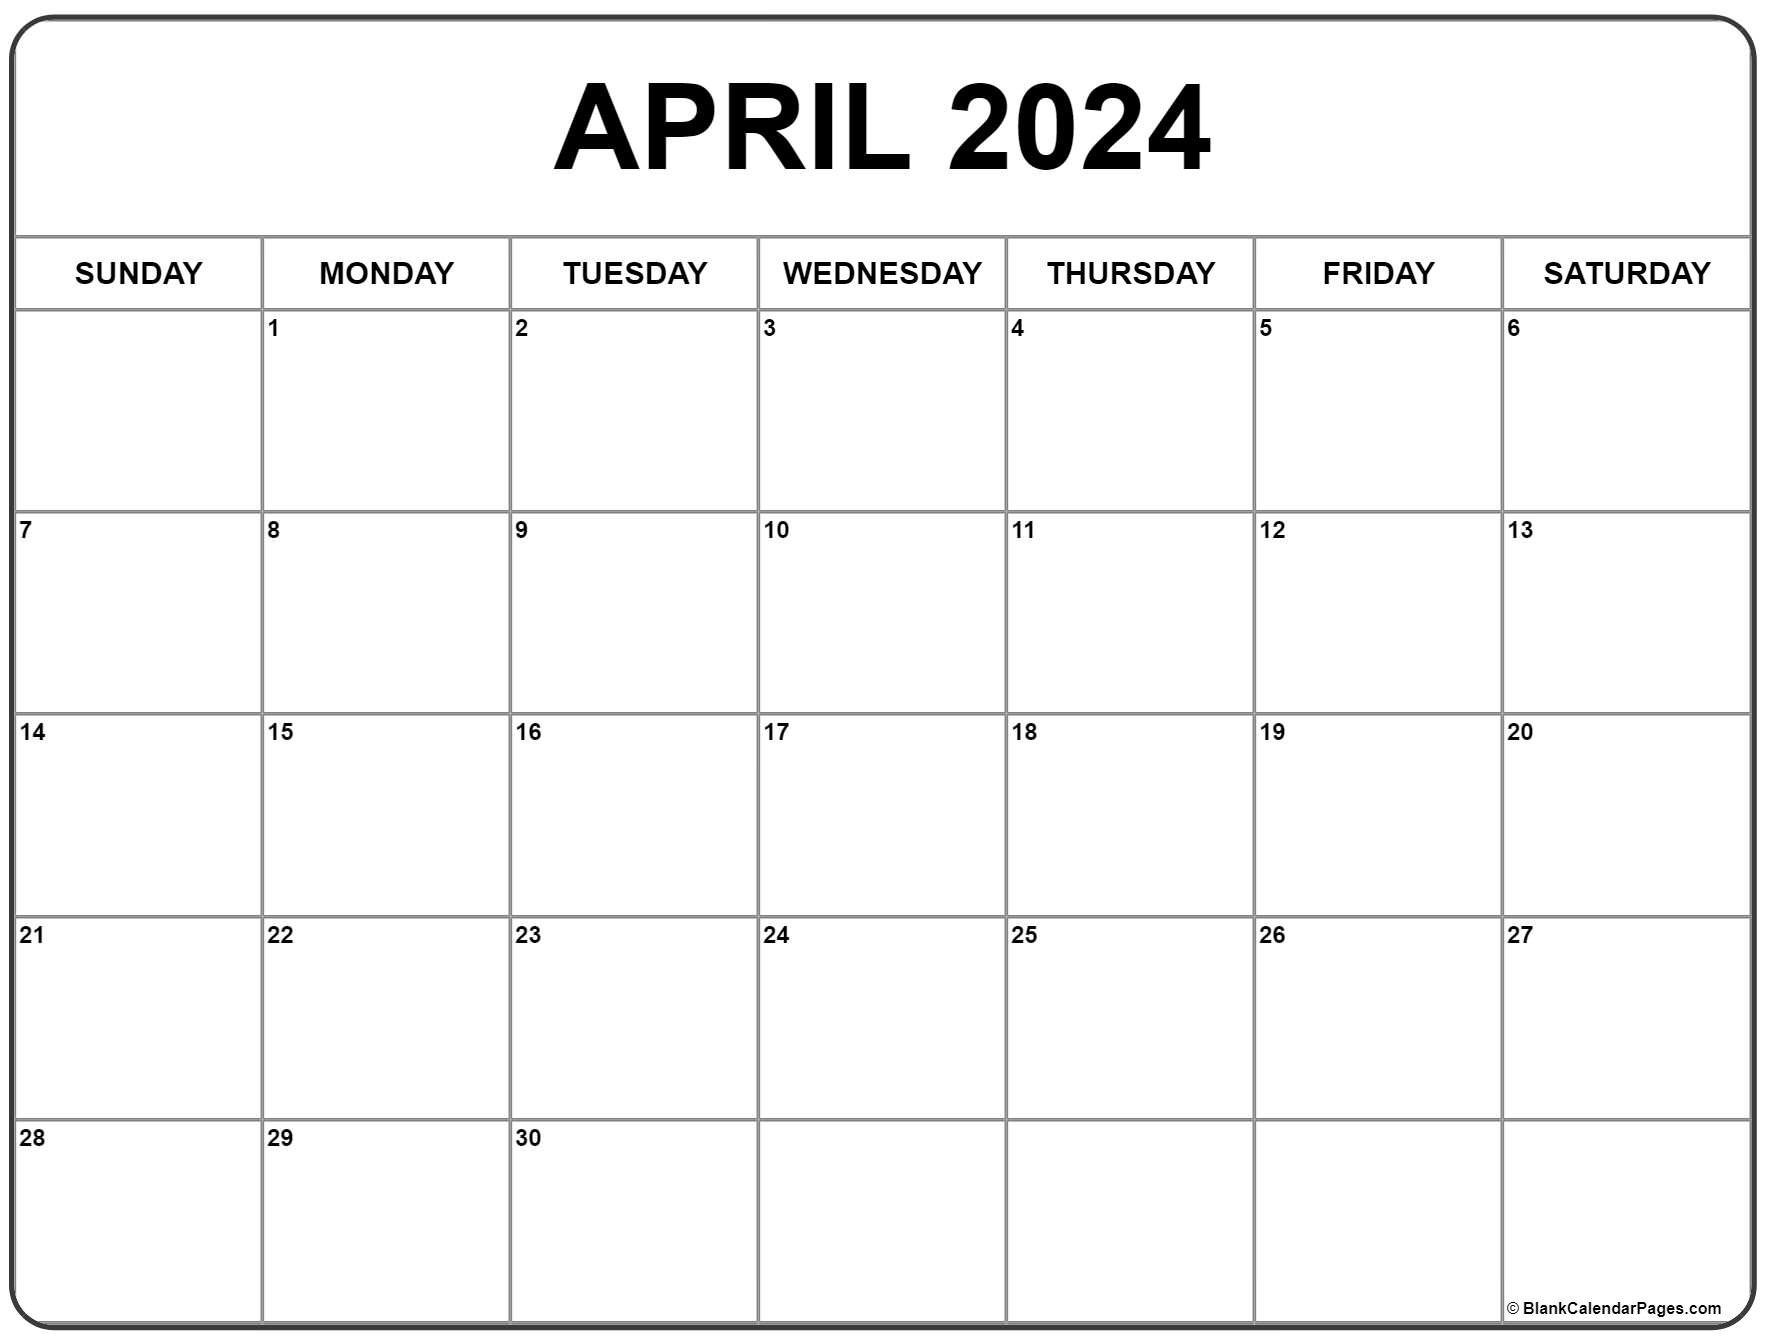 April 2024 Calendar | Free Printable Calendar for April 2024 Calendar Printable